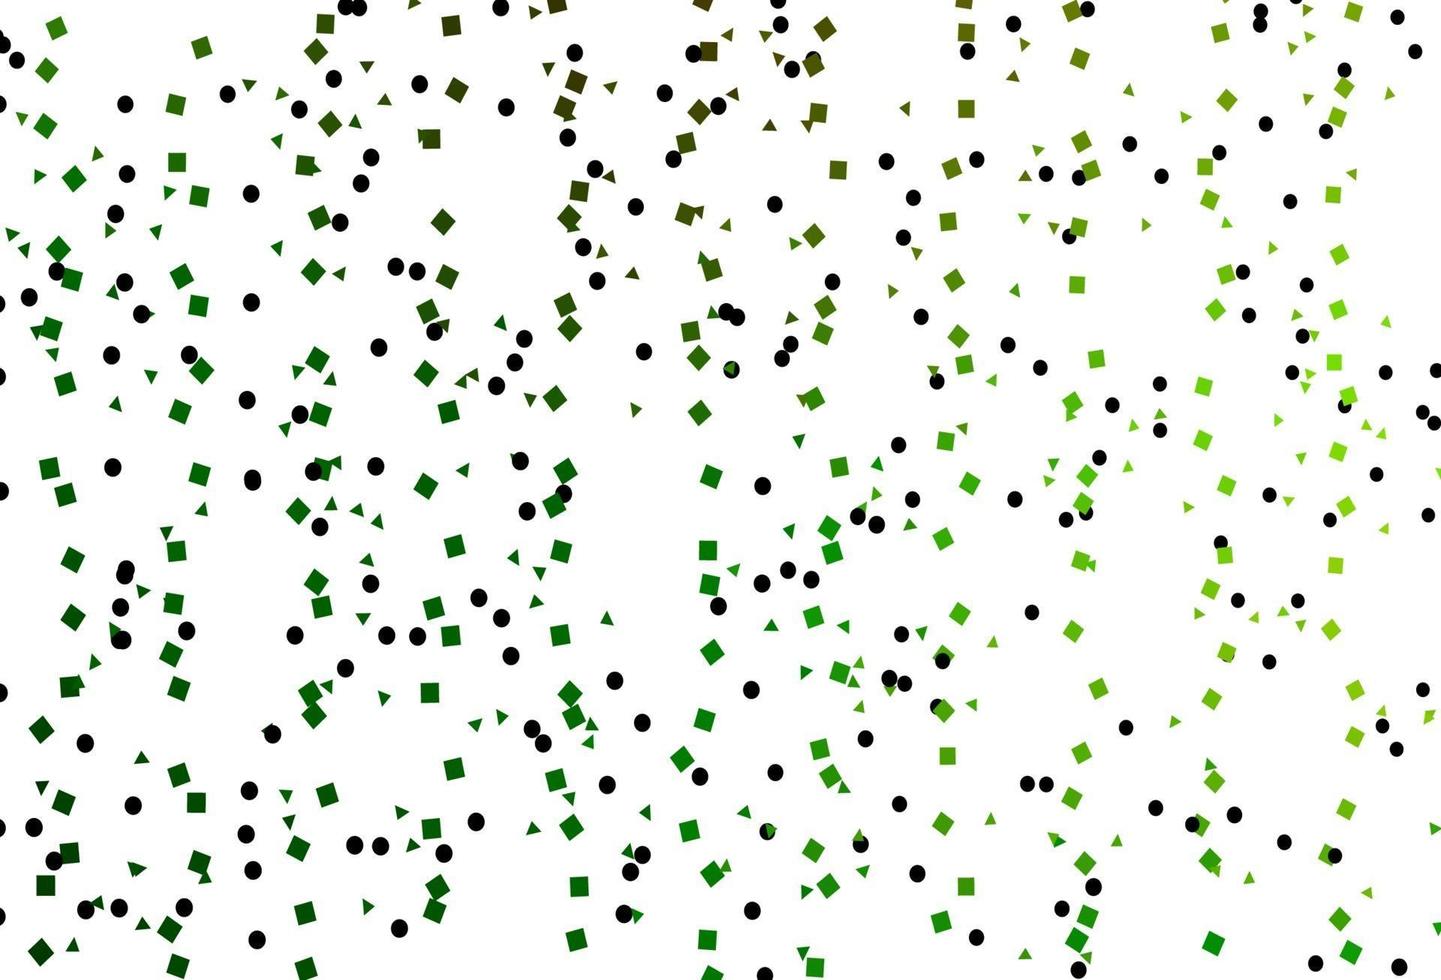 Telón de fondo de vector verde claro con líneas, círculos, rombos.